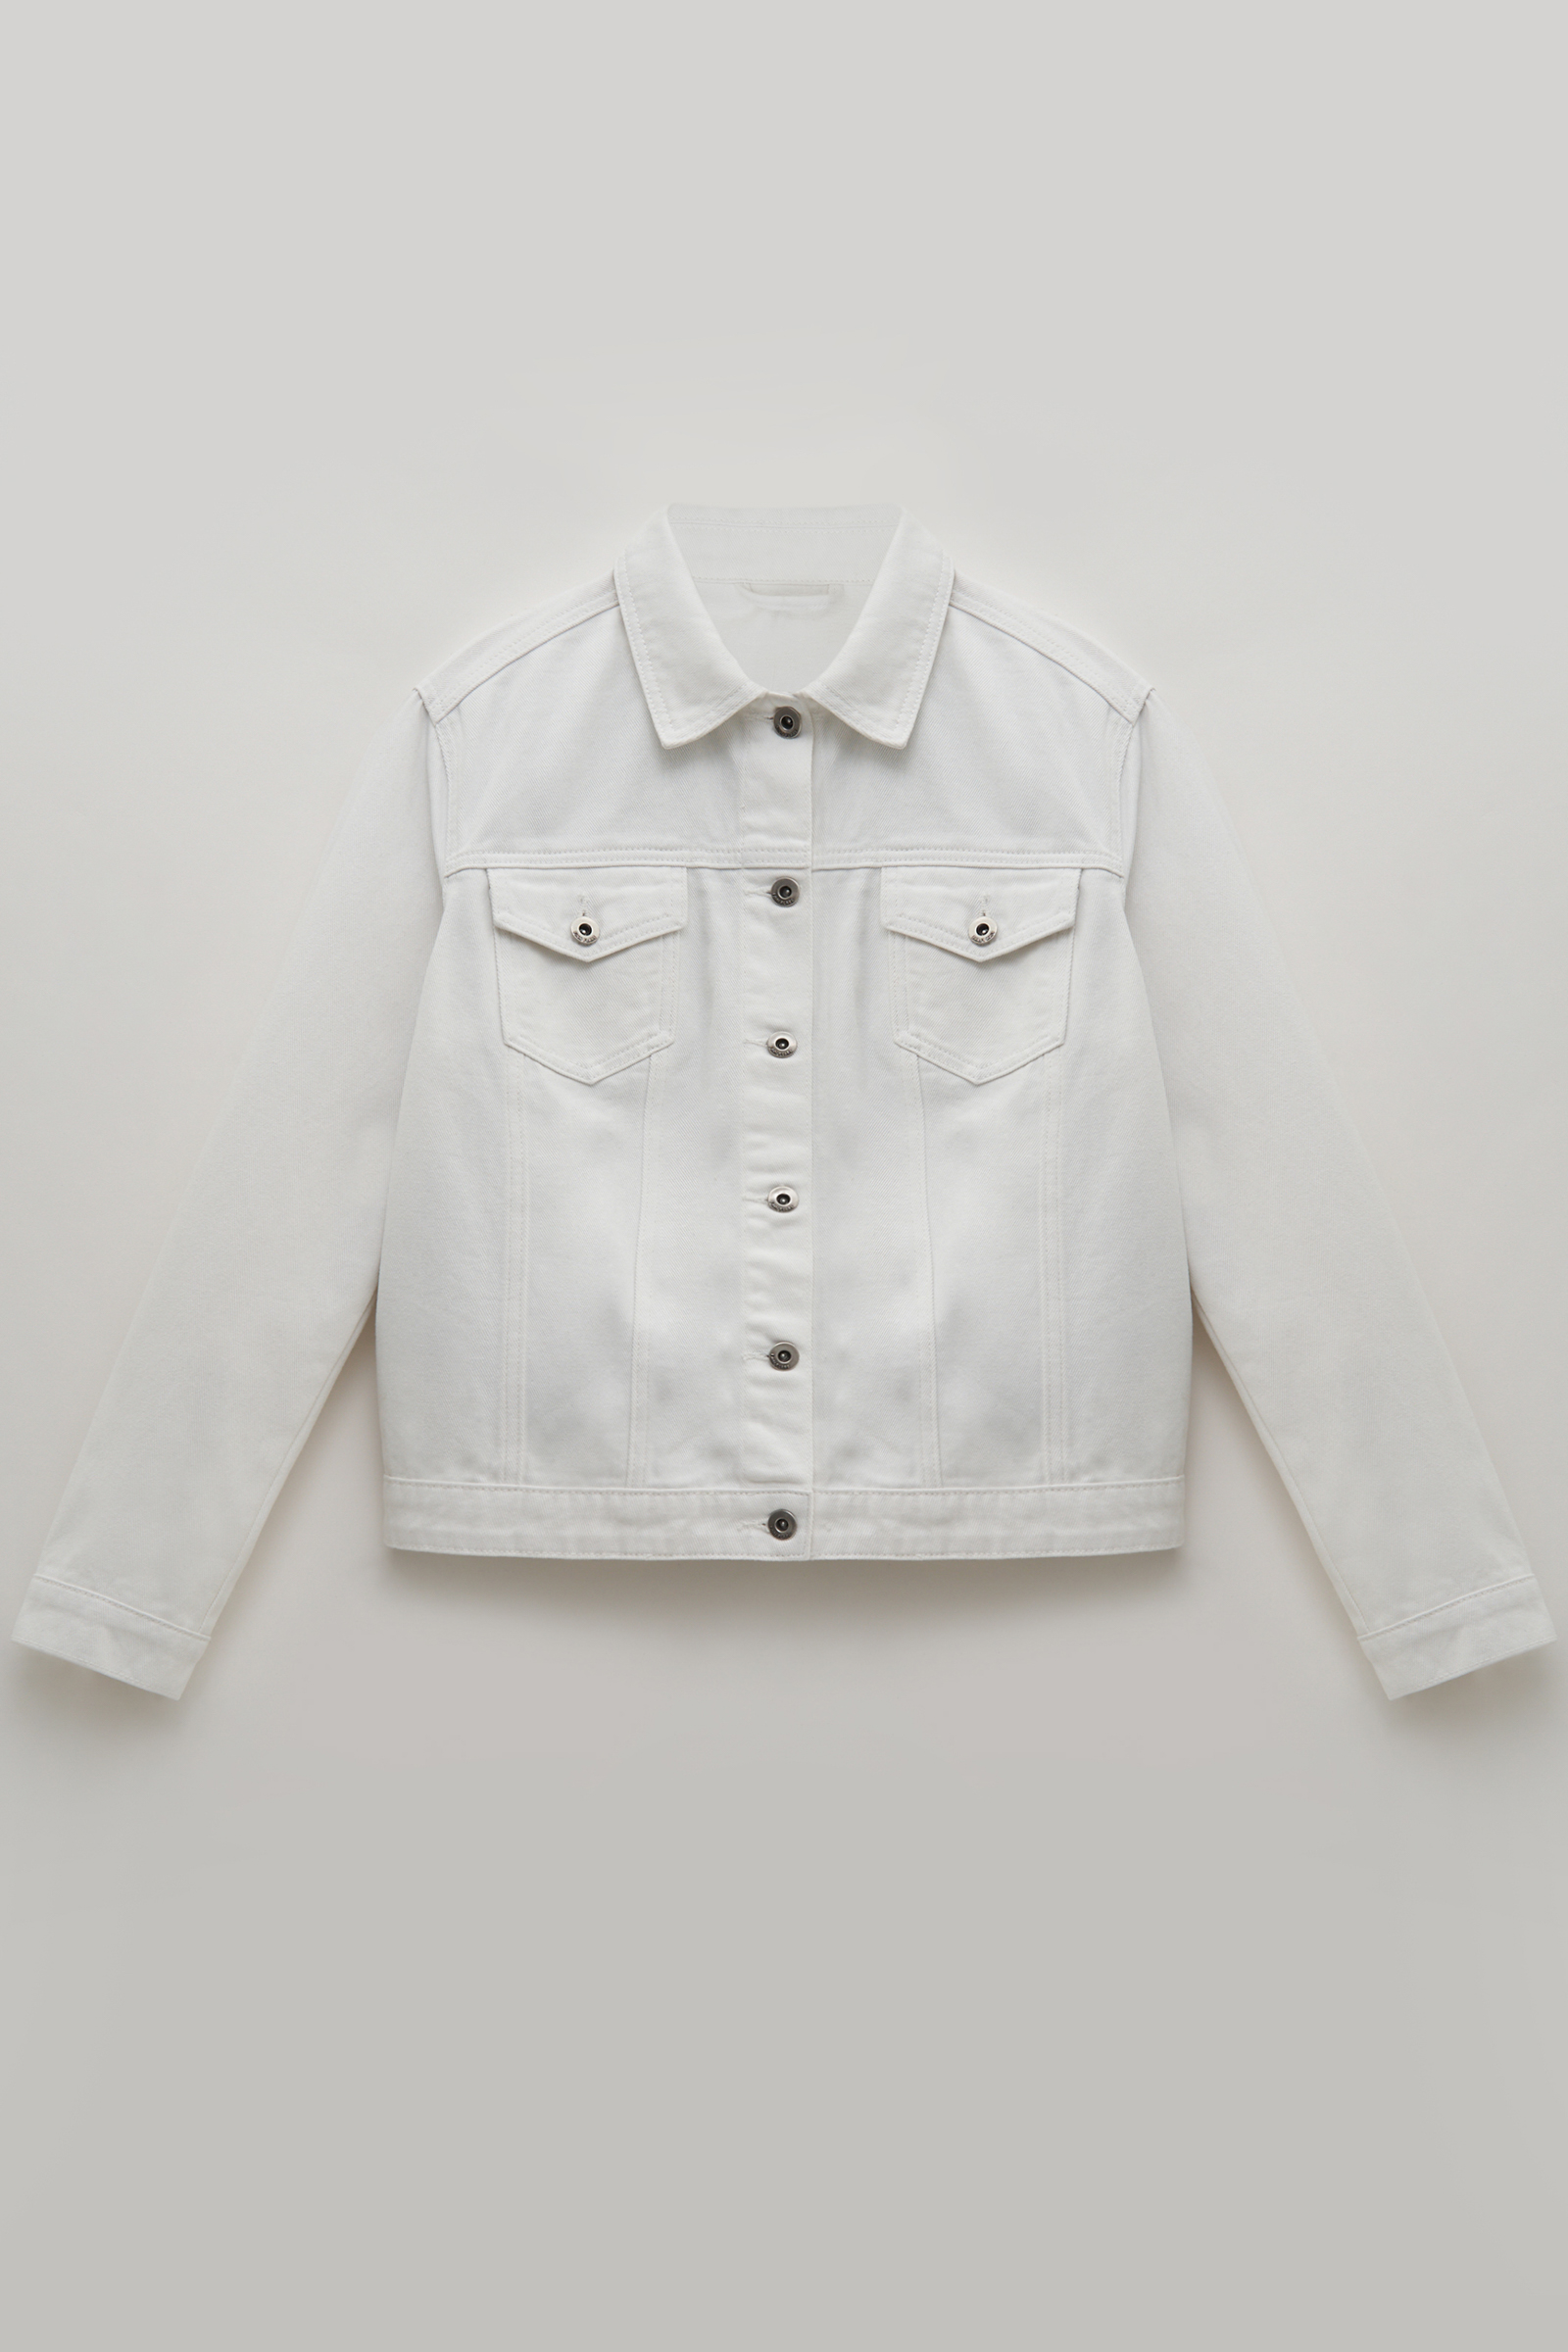 Джинсовая куртка женская Finn Flare FSC15011 белая L